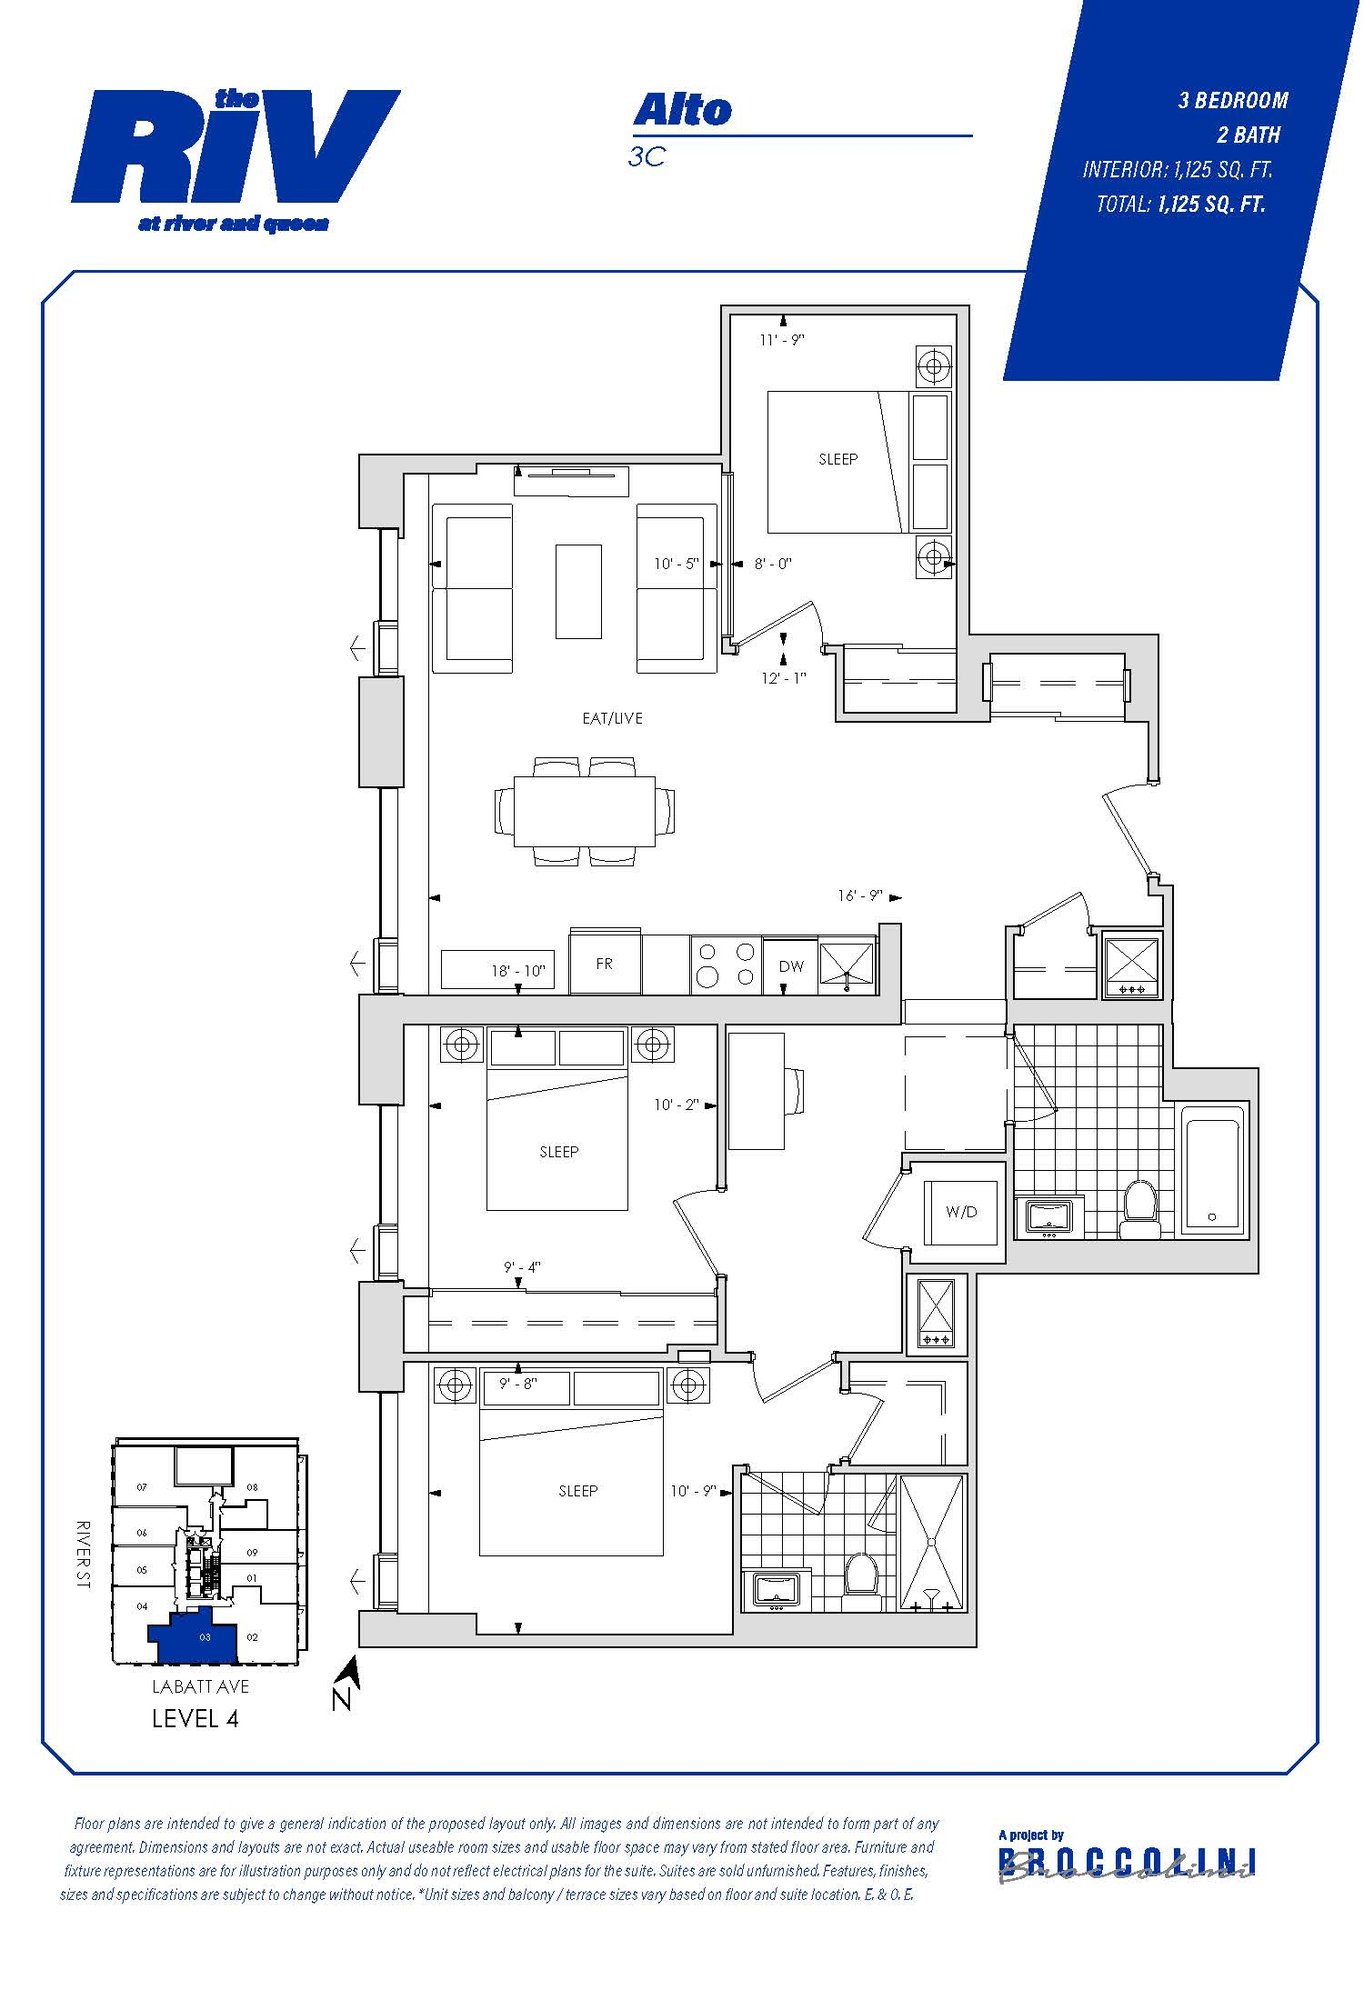 Floor plan for Alto three bedroom unit in The Riv